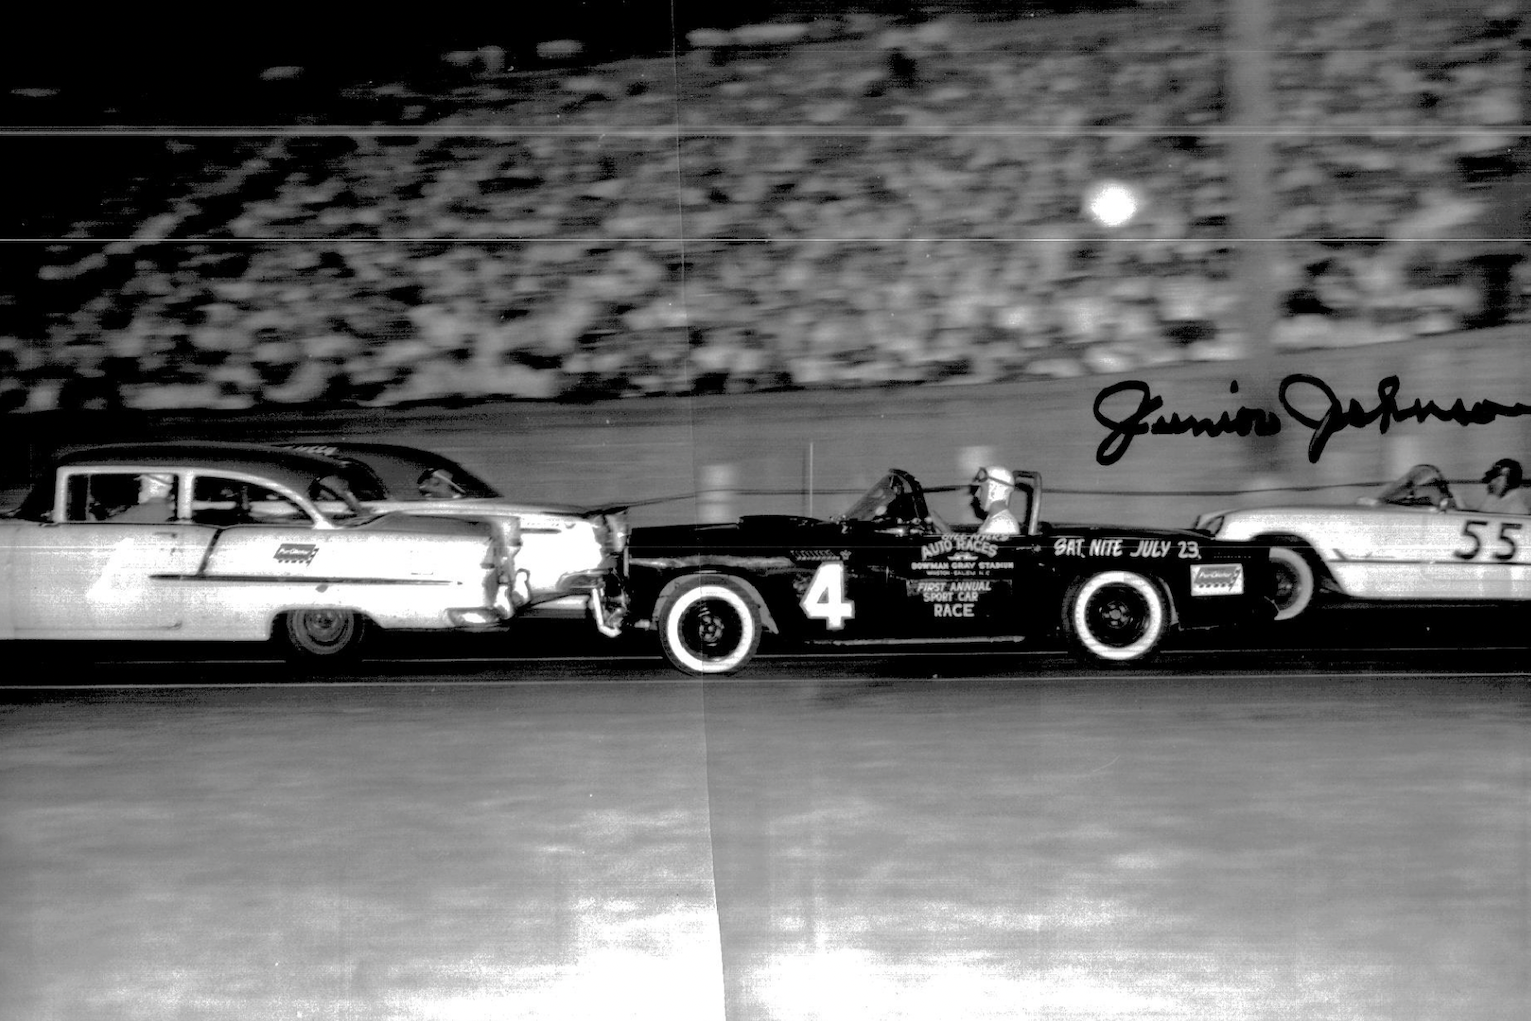 antique car - Race Janis Johnson Sat Nite July 23 55